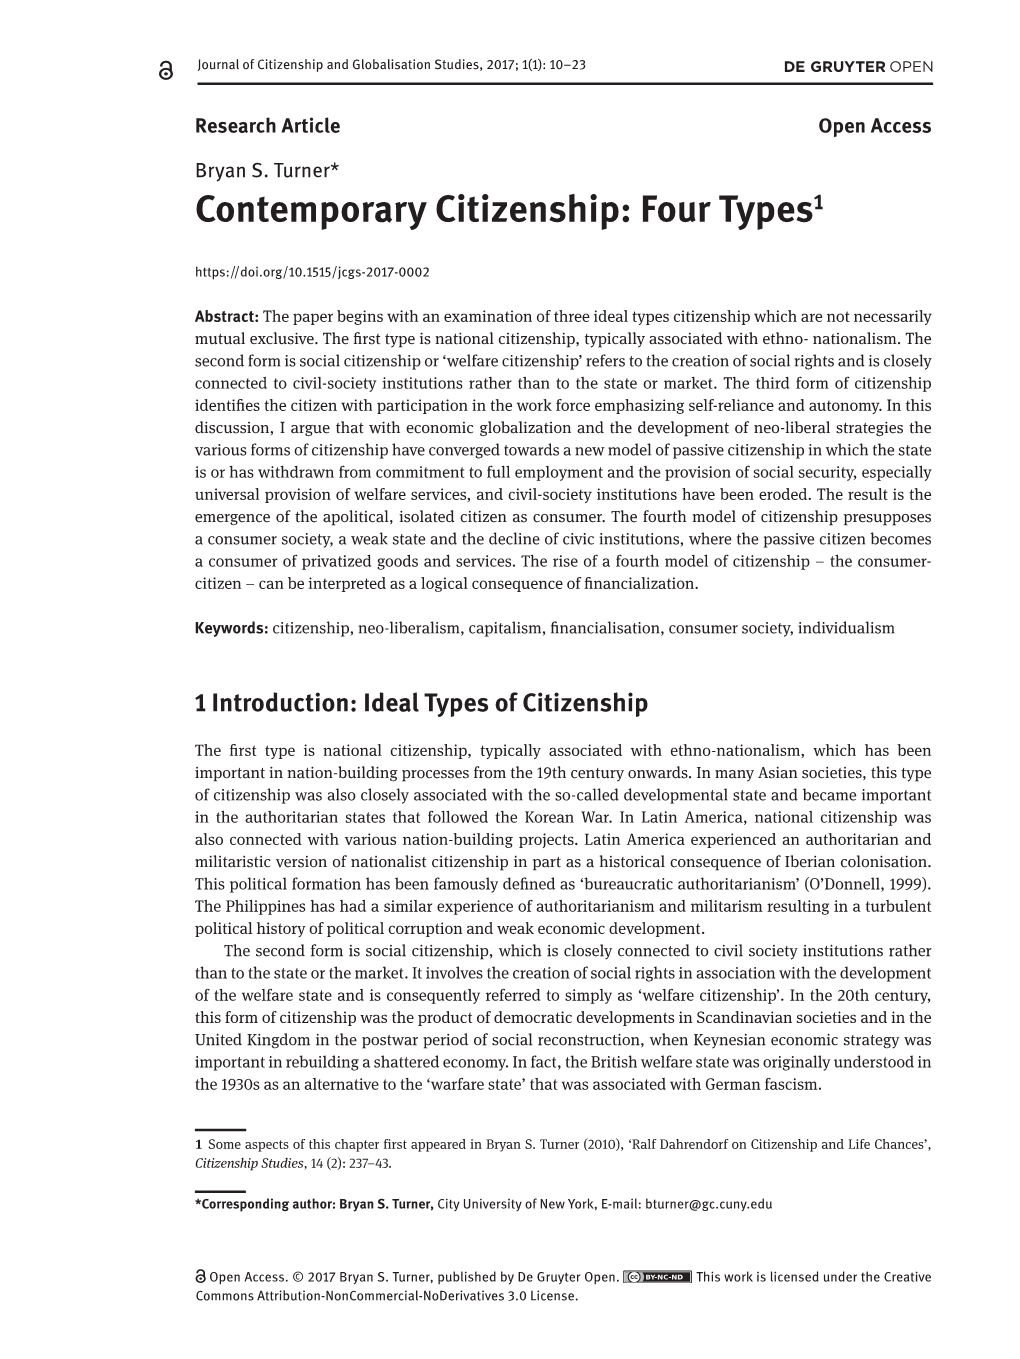 Contemporary Citizenship: Four Types1